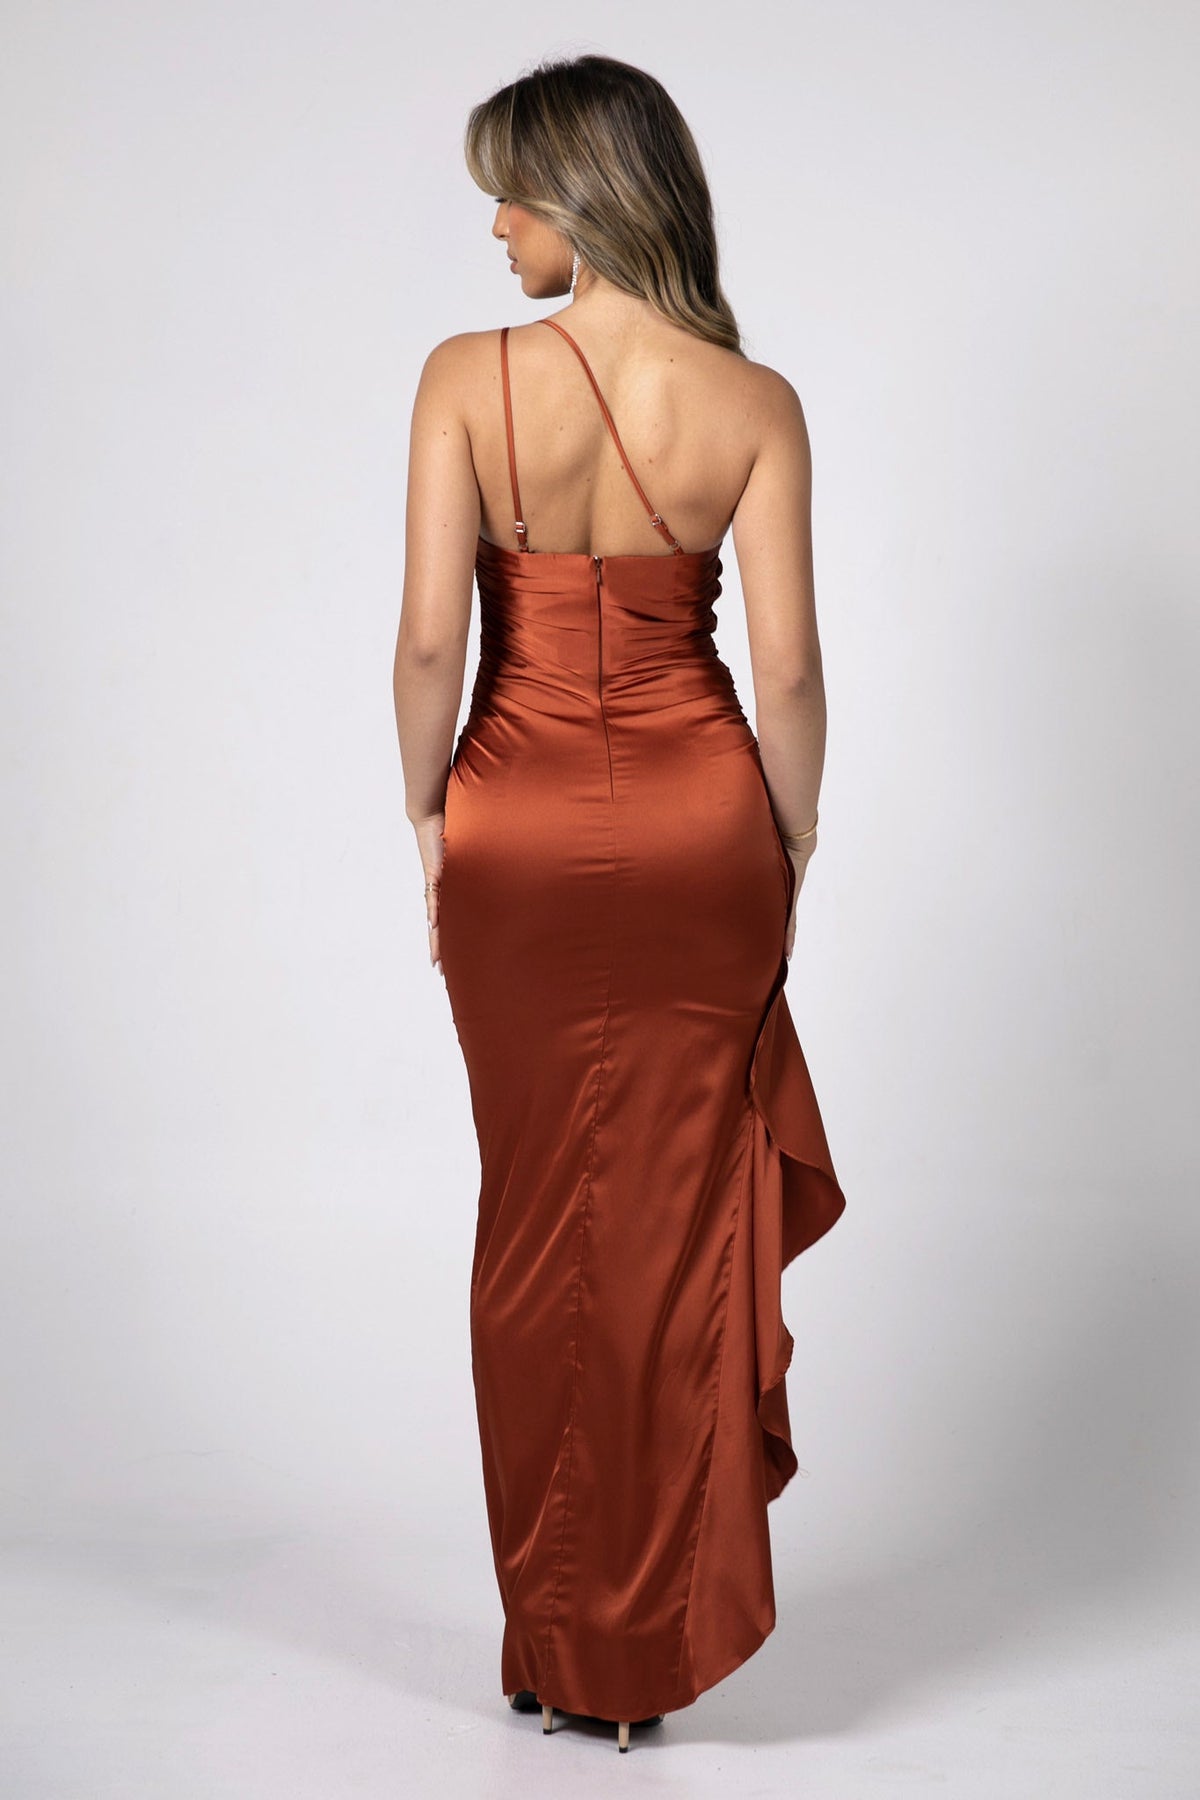 Back Image Showing 2 Adjustable Straps at the Back of Form Fitting Satin Maxi Dress with One Shoulder Neckline, Gathering Detail at Waist and Frill Hemline in Burnt Orange Color